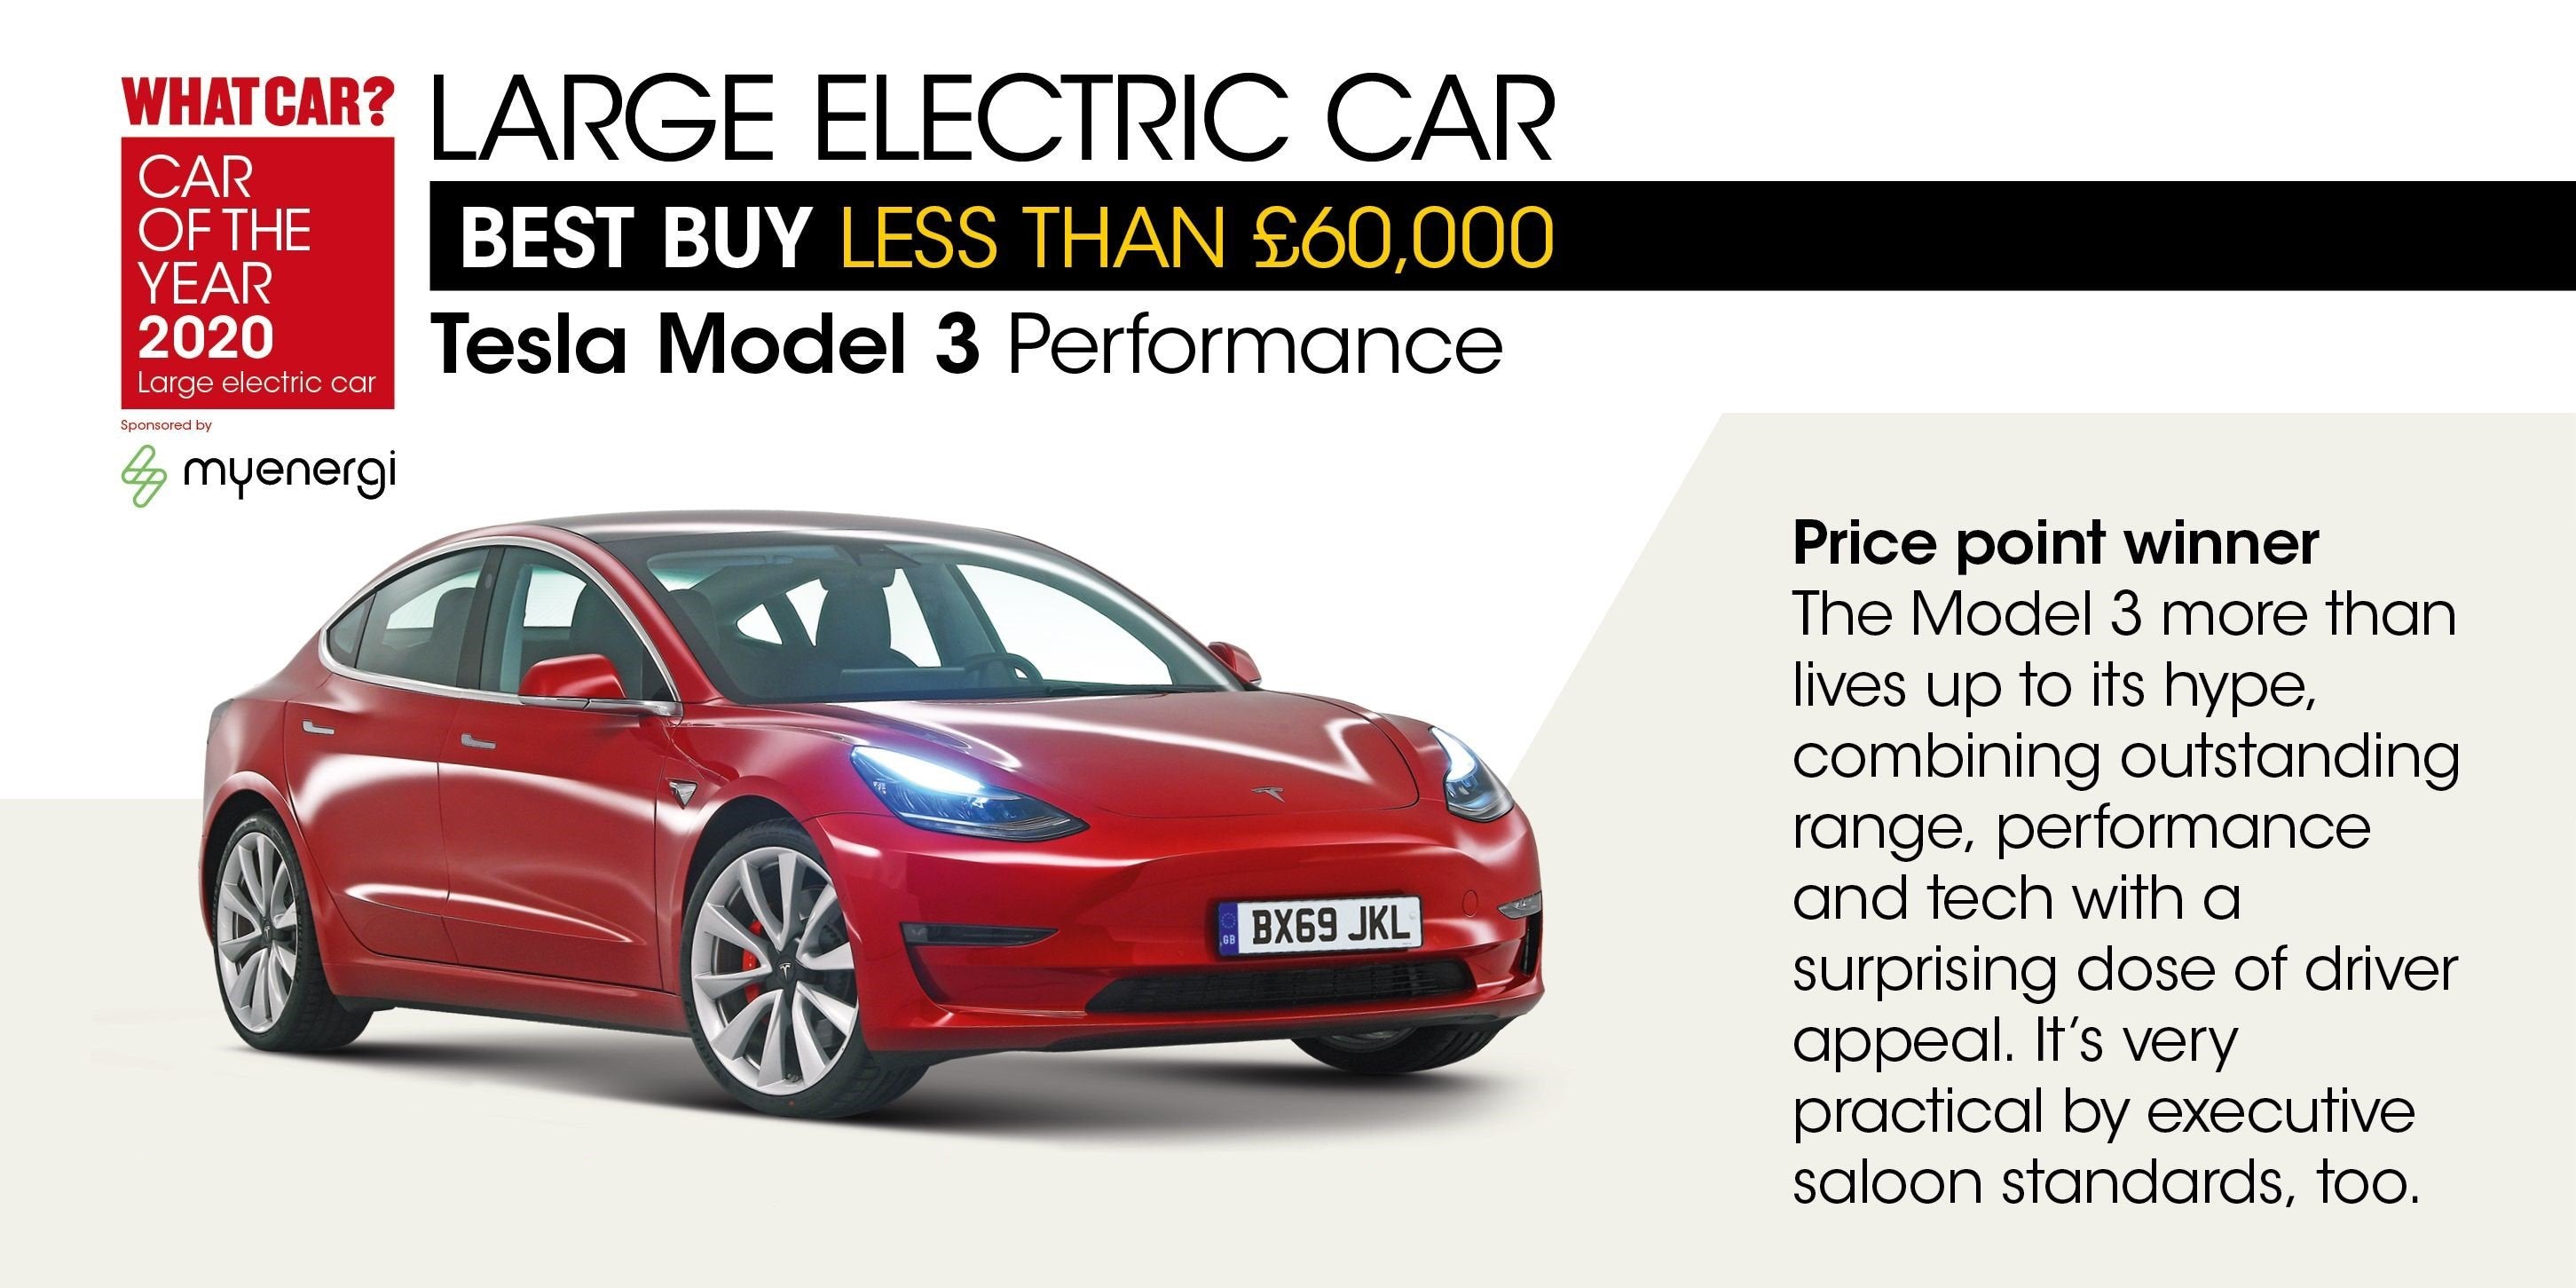 Tesla Model 3 wins Large Electric Car of the Year 2020 Award in UK